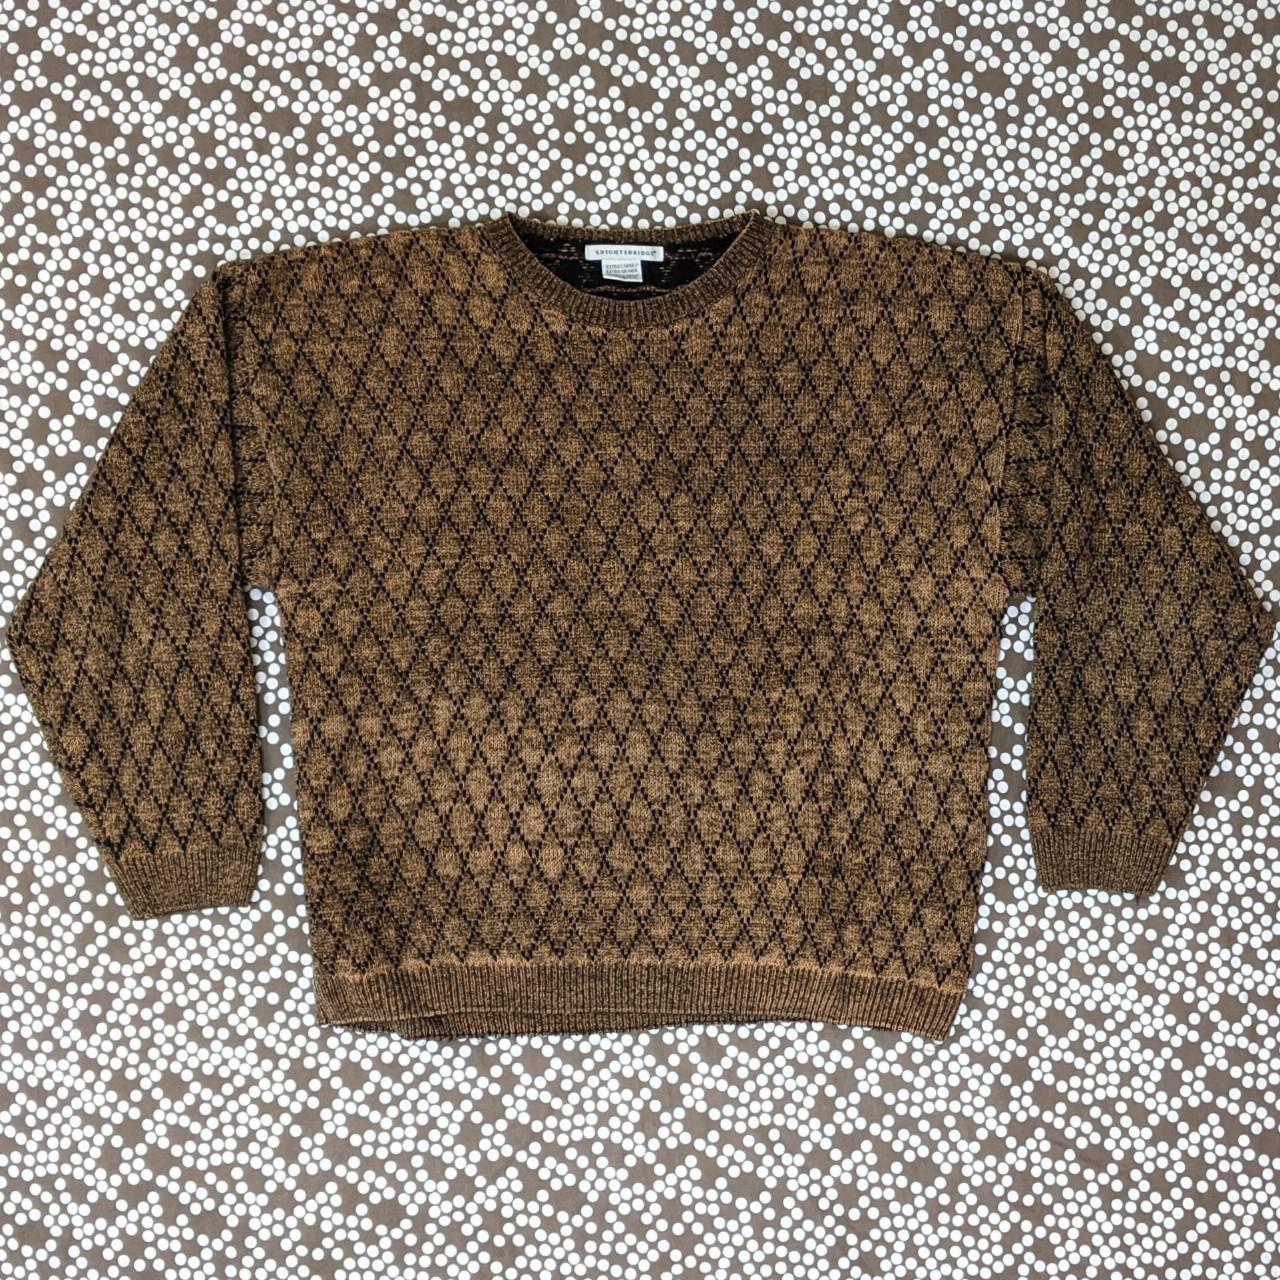 Product Image 1 - 🔸🔶🔸Vintage 90s Knightsbridge sweater, funky